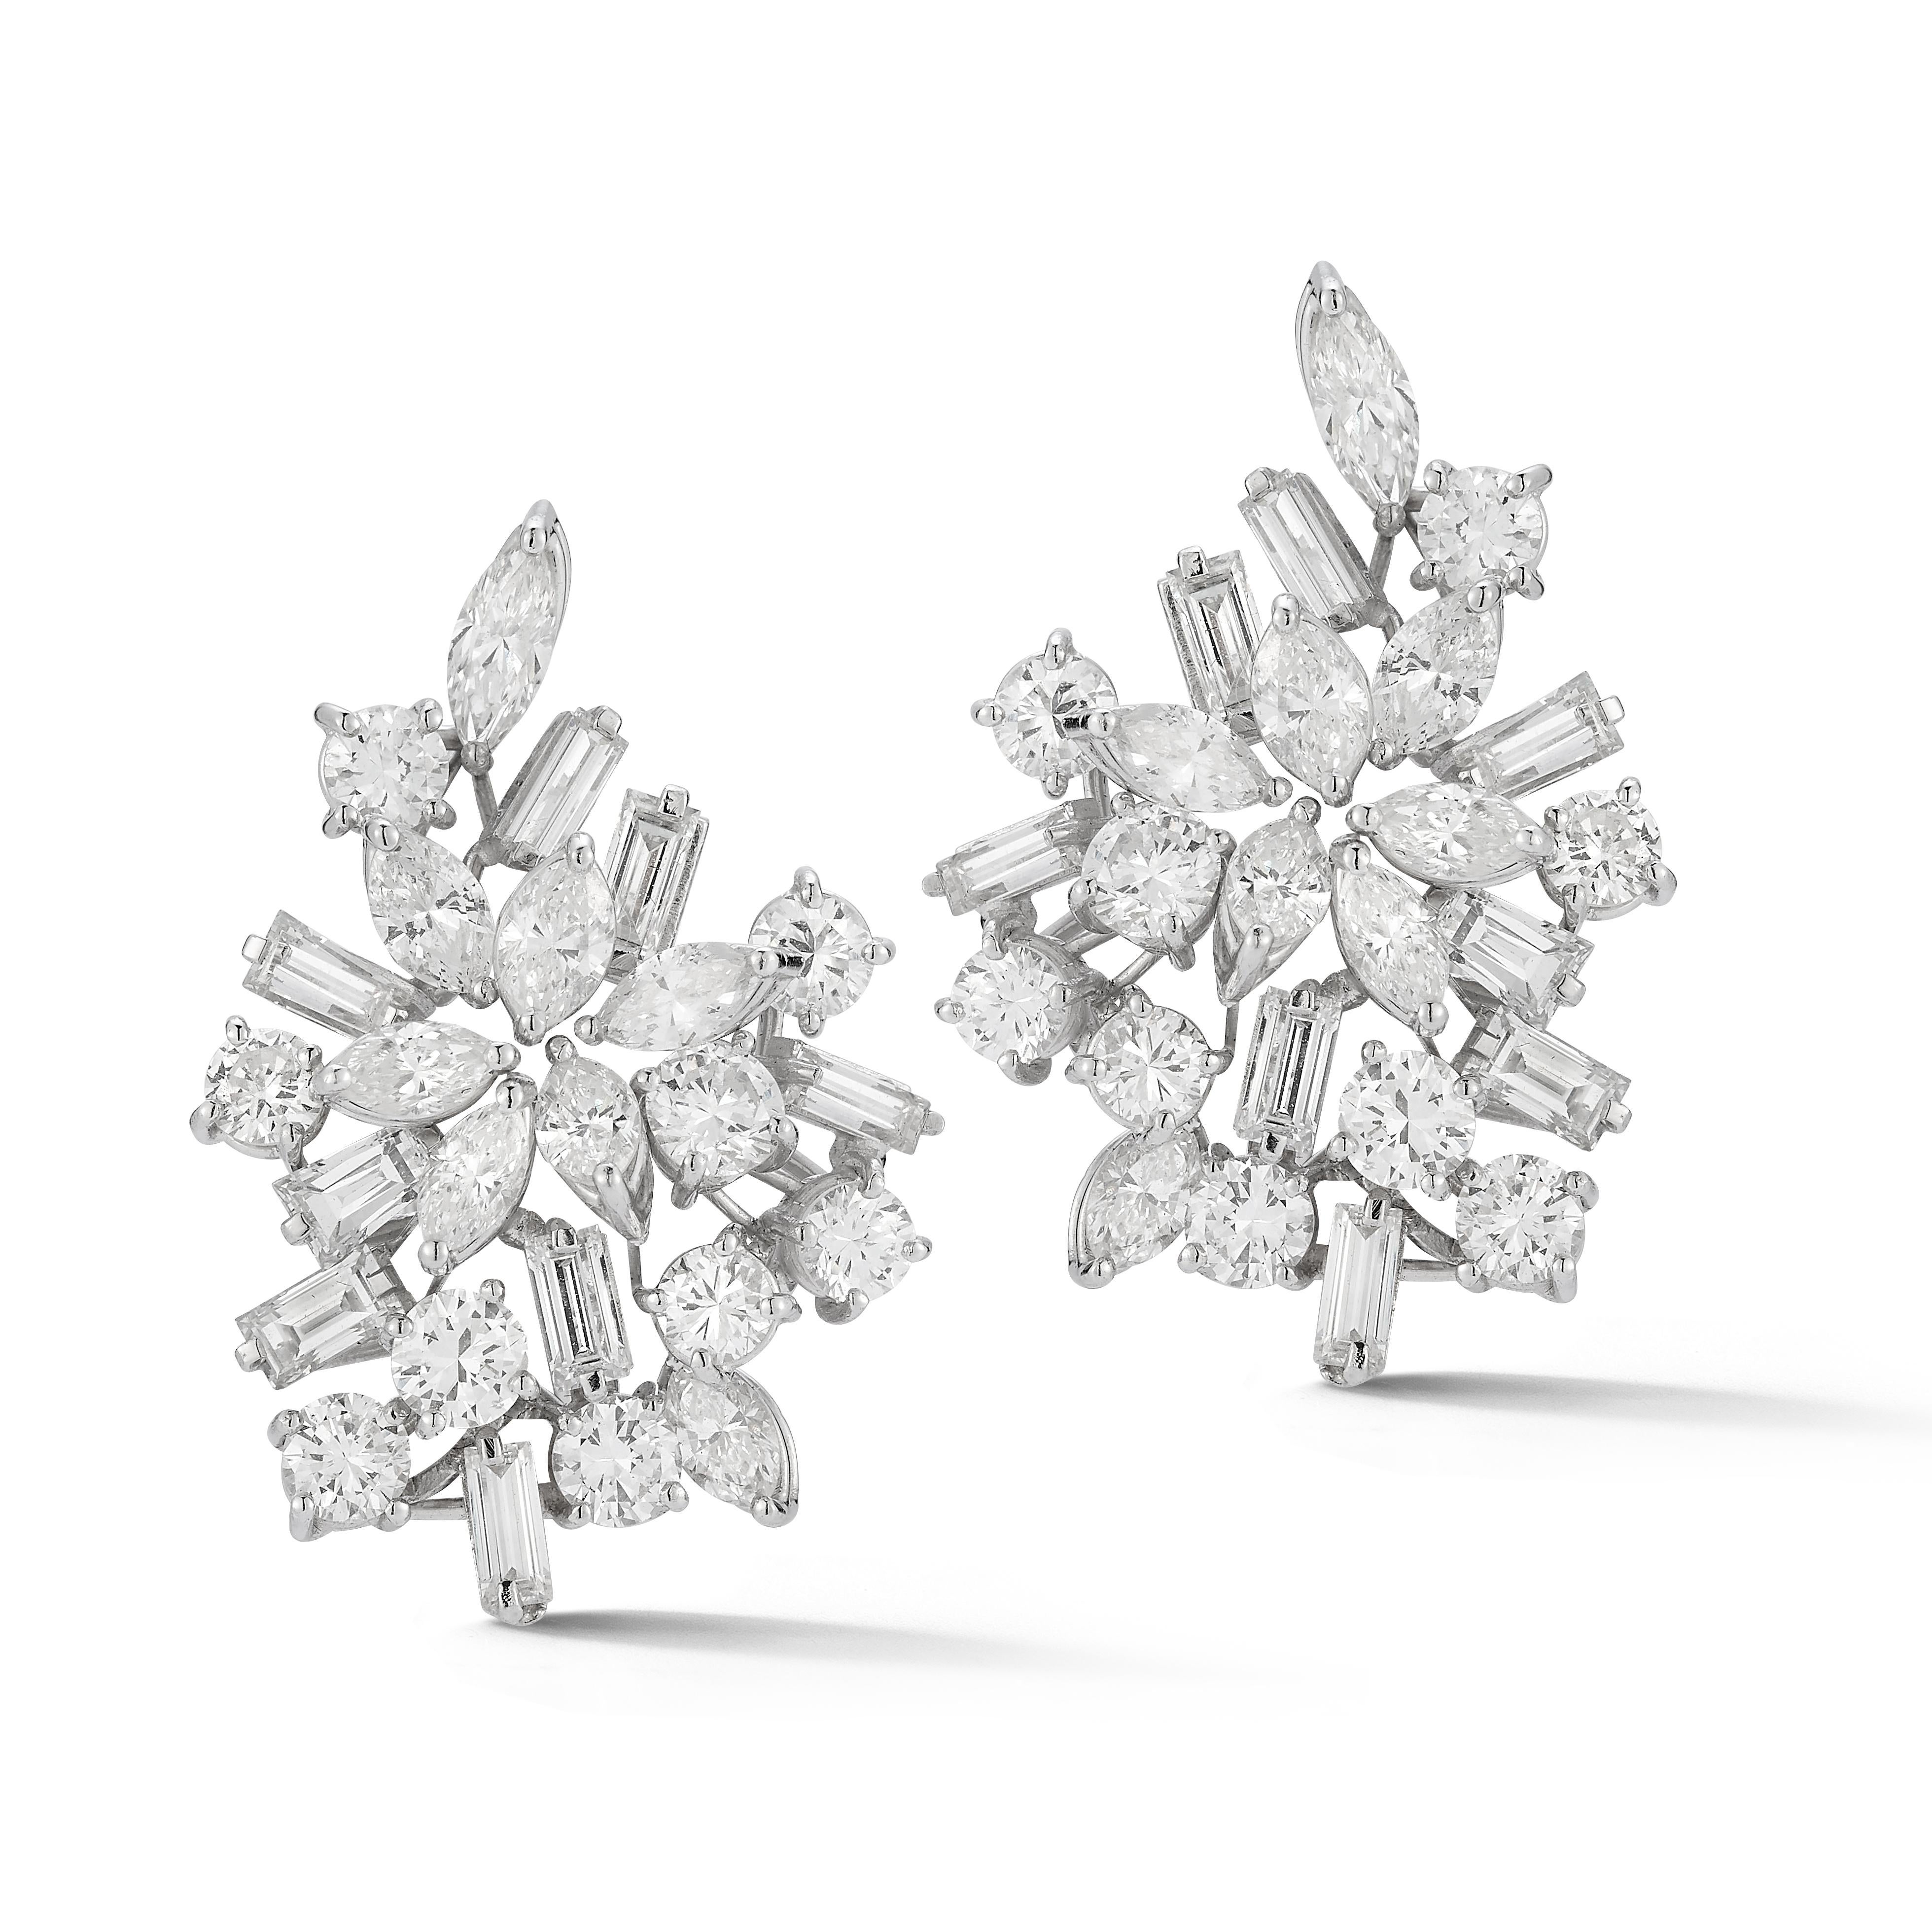 Mixed Cut Diamond Earrings

A pair of platinum earrings set with 66 baguette cut diamonds, 18 round cut diamonds, and 16 marquise cut diamonds

Total Approximate Diamond Weight: 7.14 carats

Length: 1.25